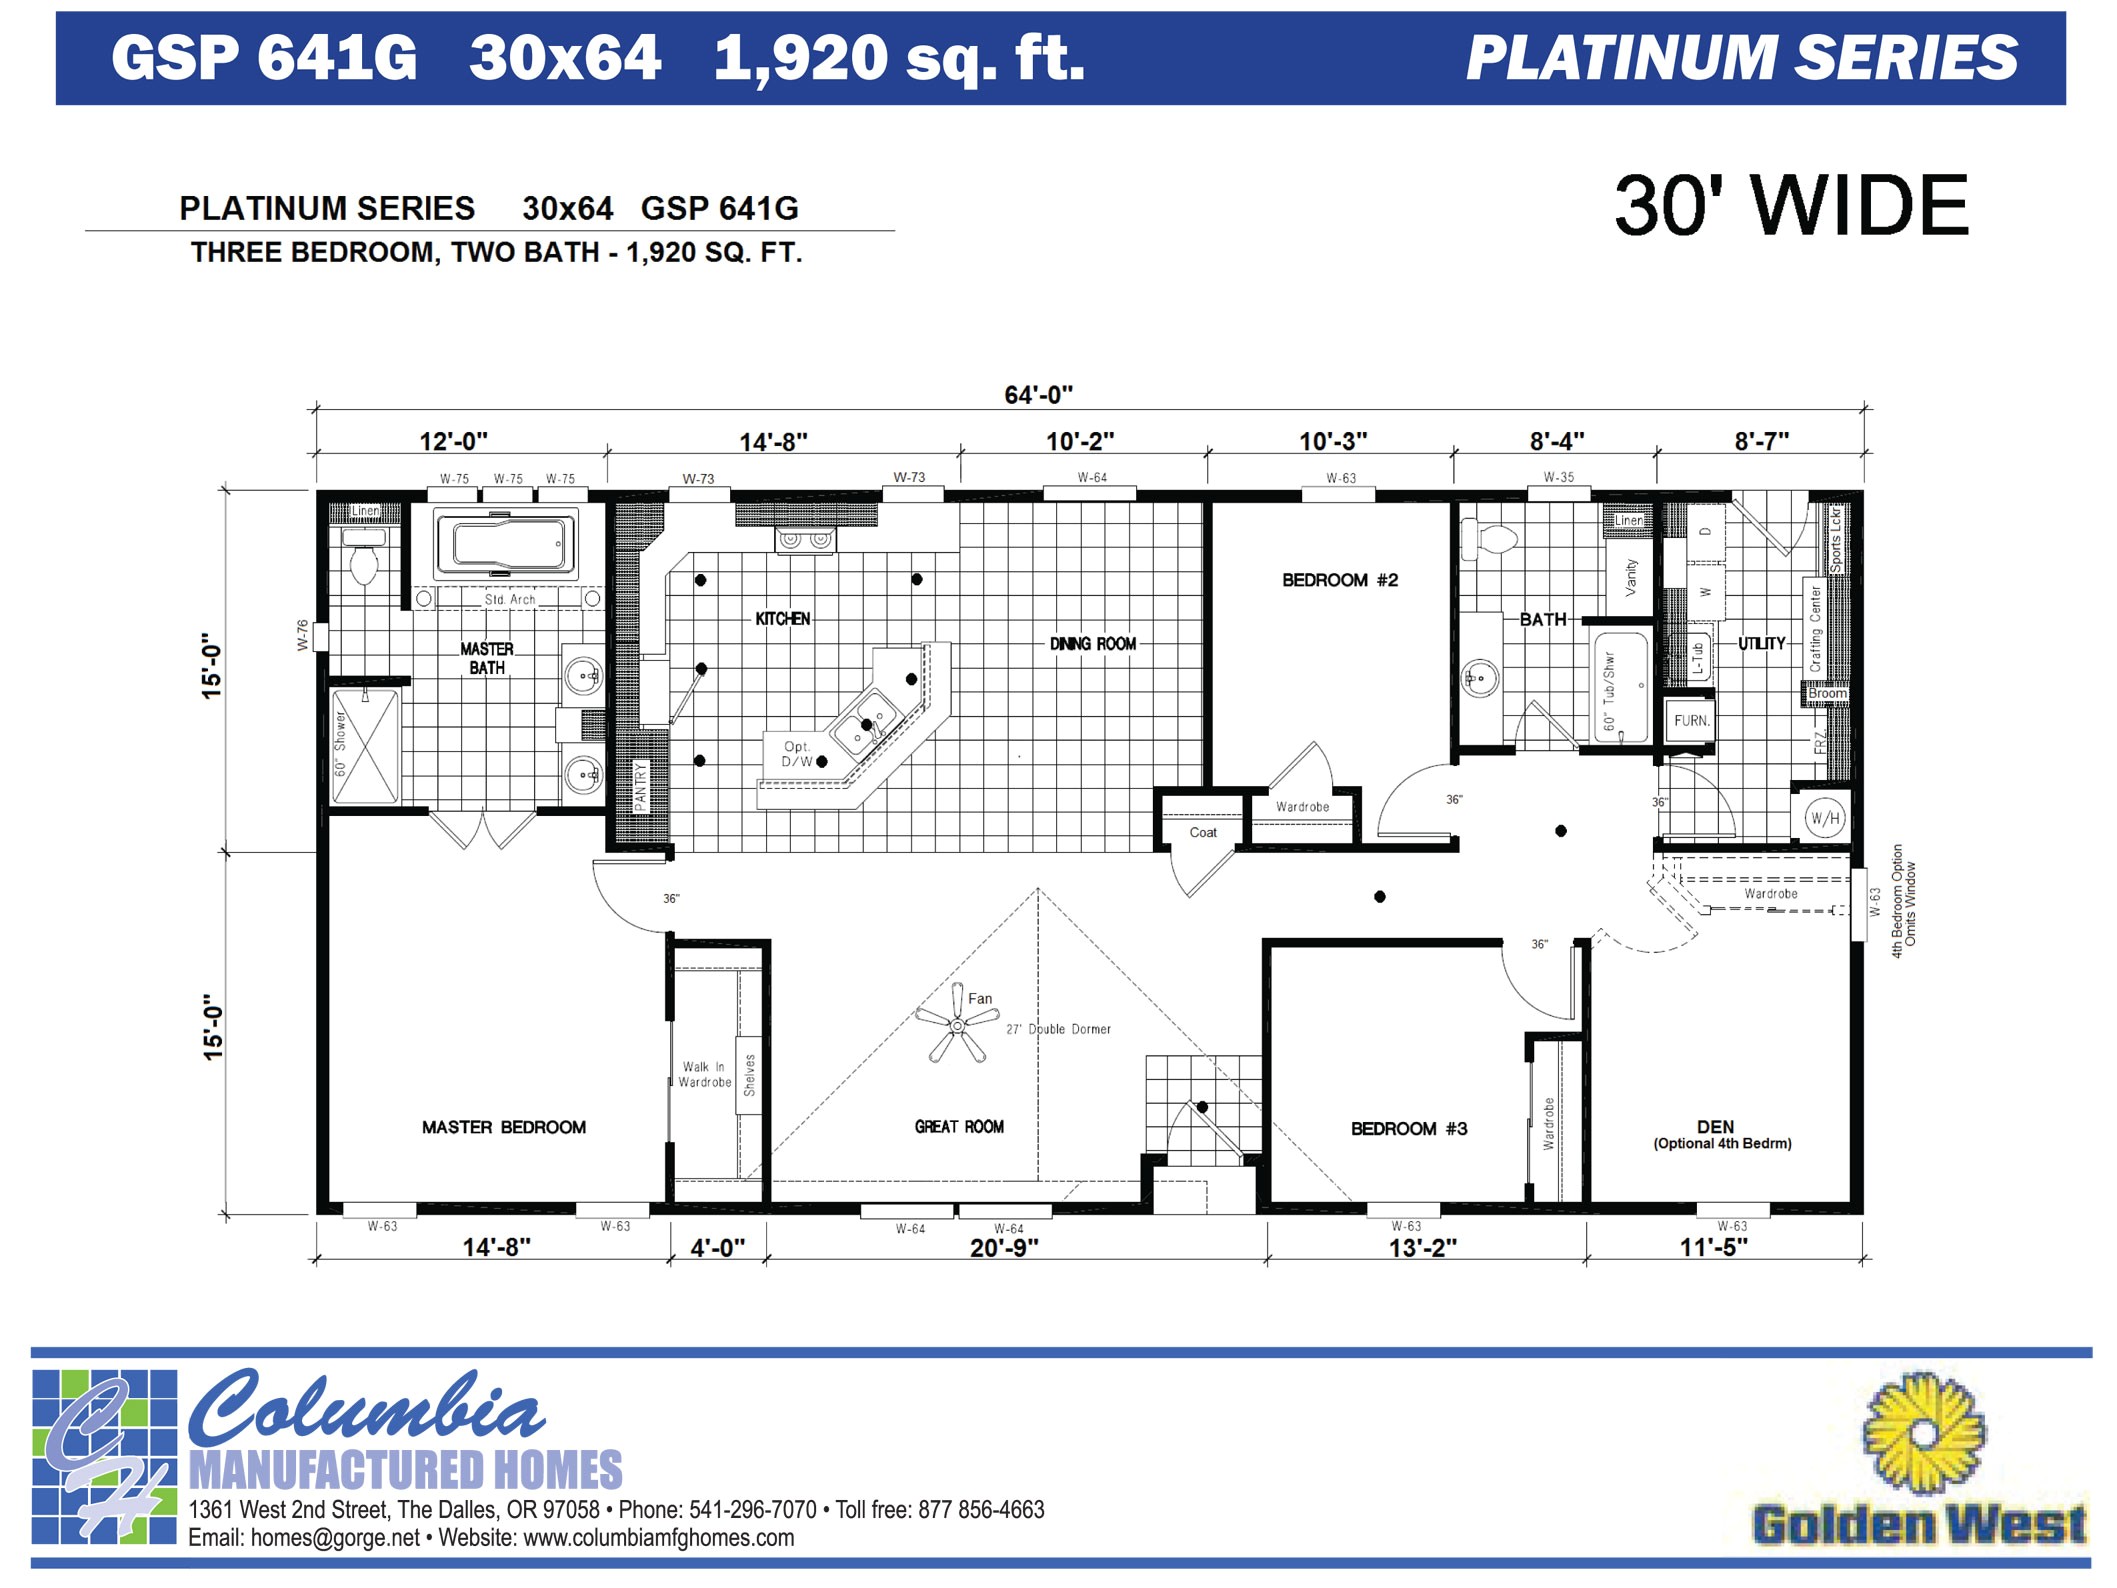 Platinum Homes Floor Plans Columbia Manufactured Homes Golden West Platinum Series